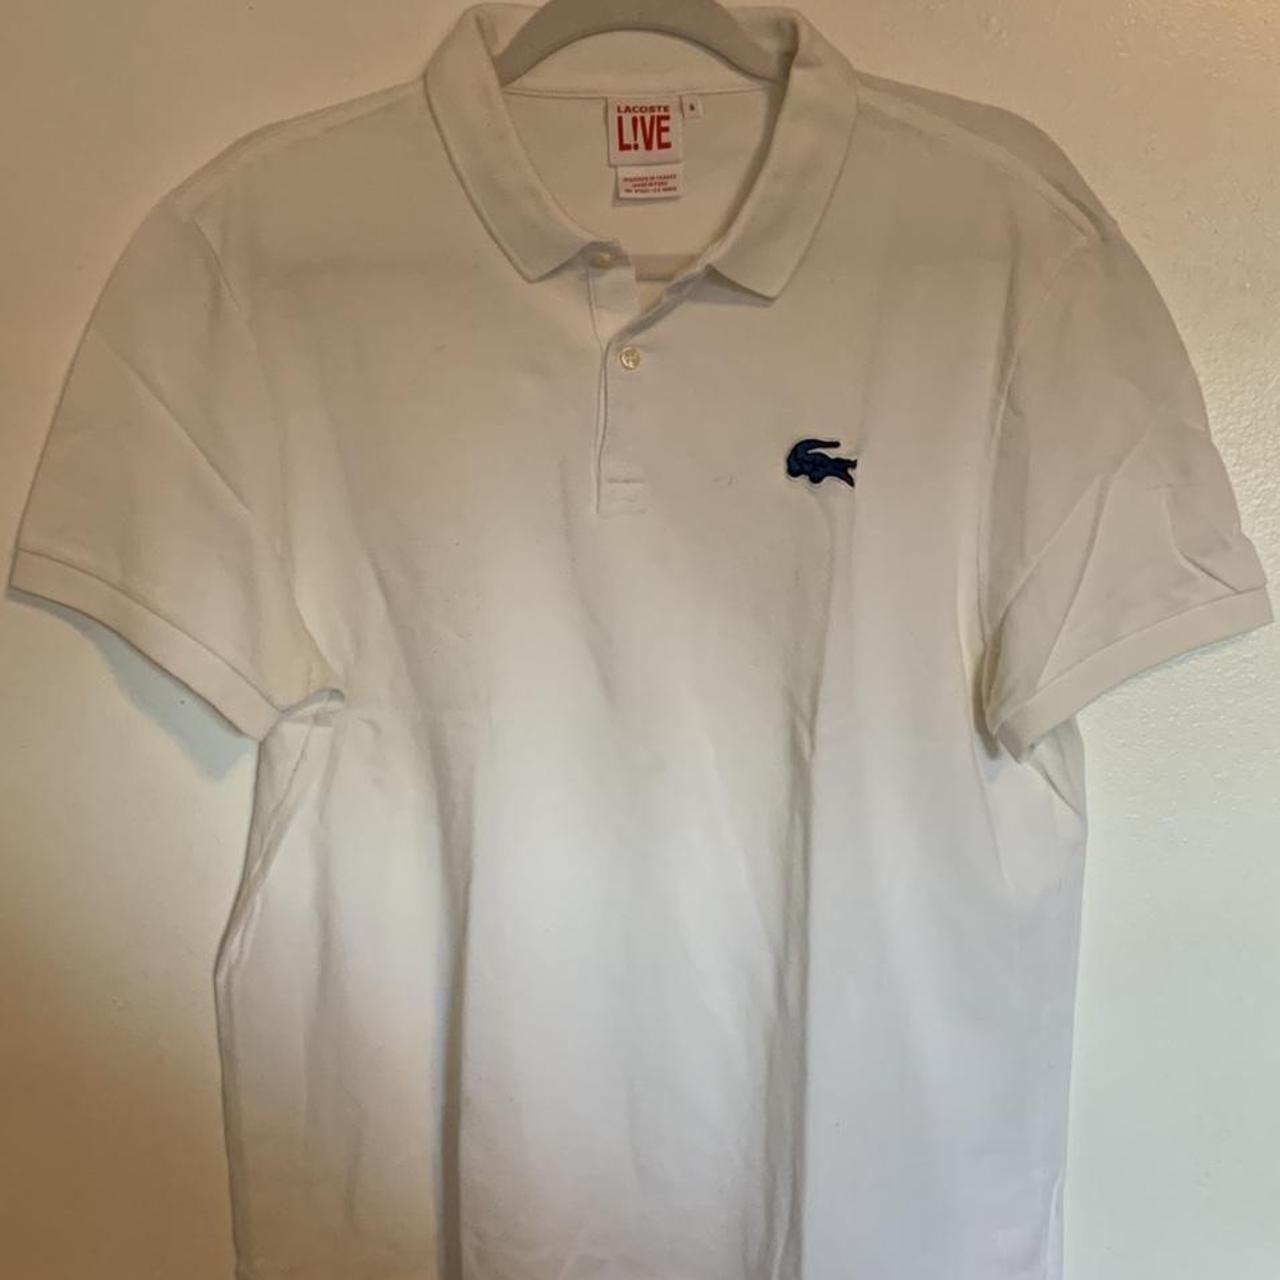 Lacoste Live Men's White Polo-shirts